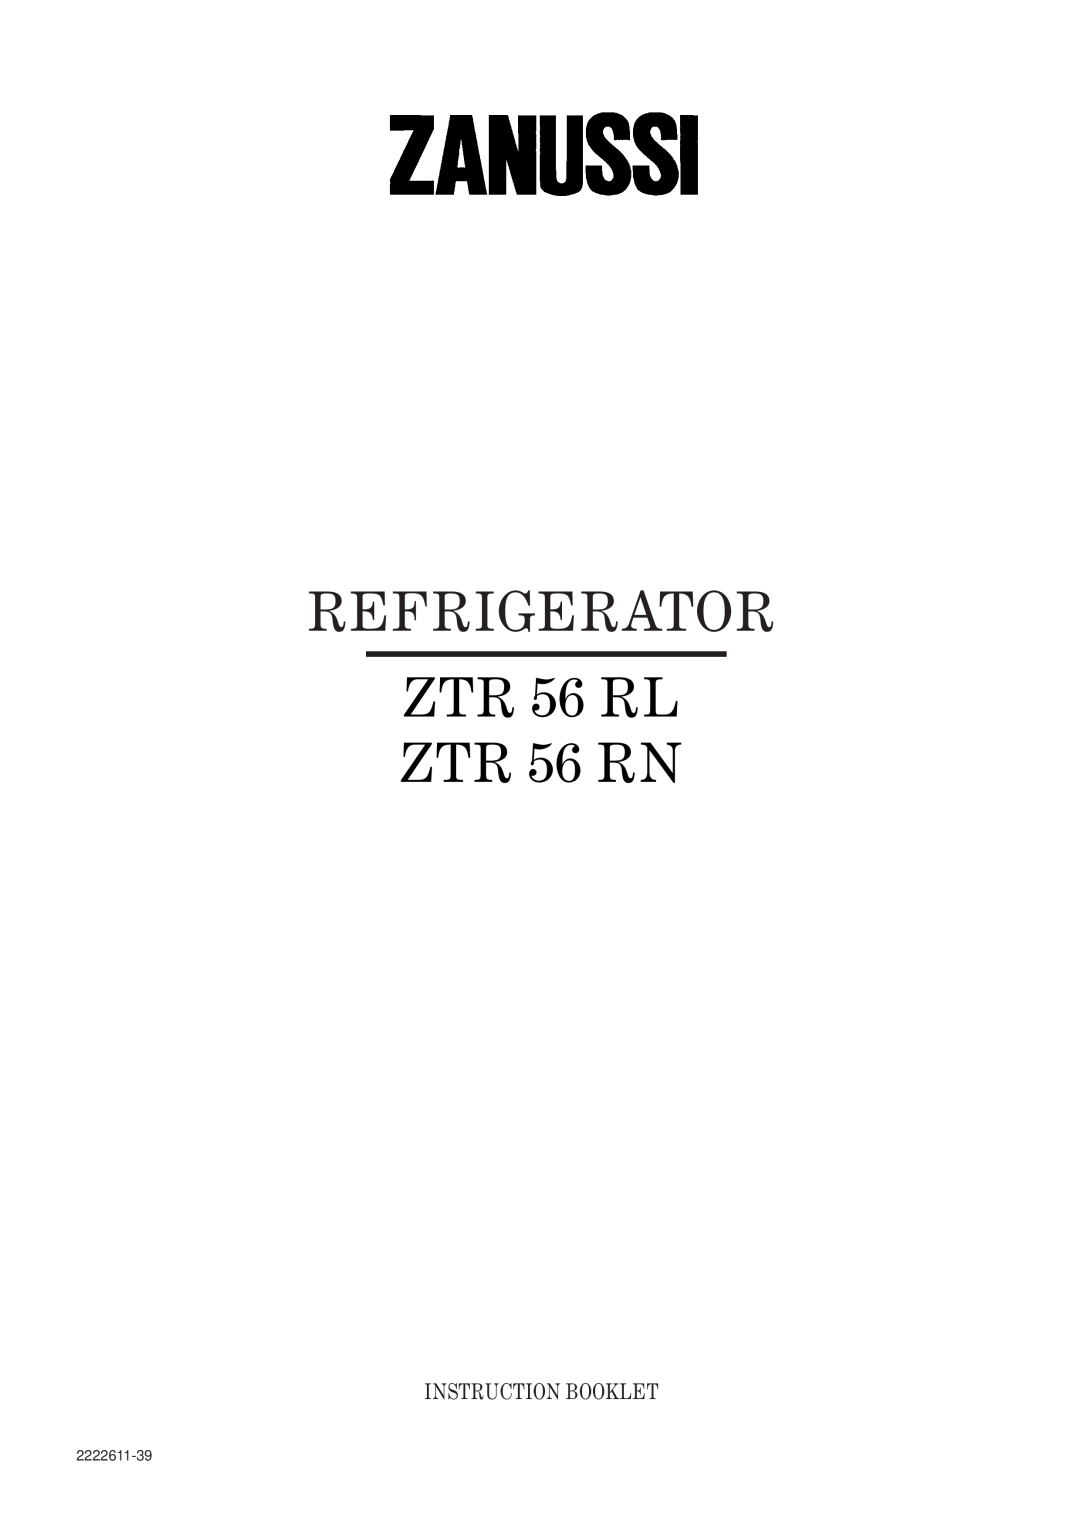 Zanussi manual Refrigerator, ZTR 56 RL ZTR 56 RN, Instruction Booklet, 2222611-39 